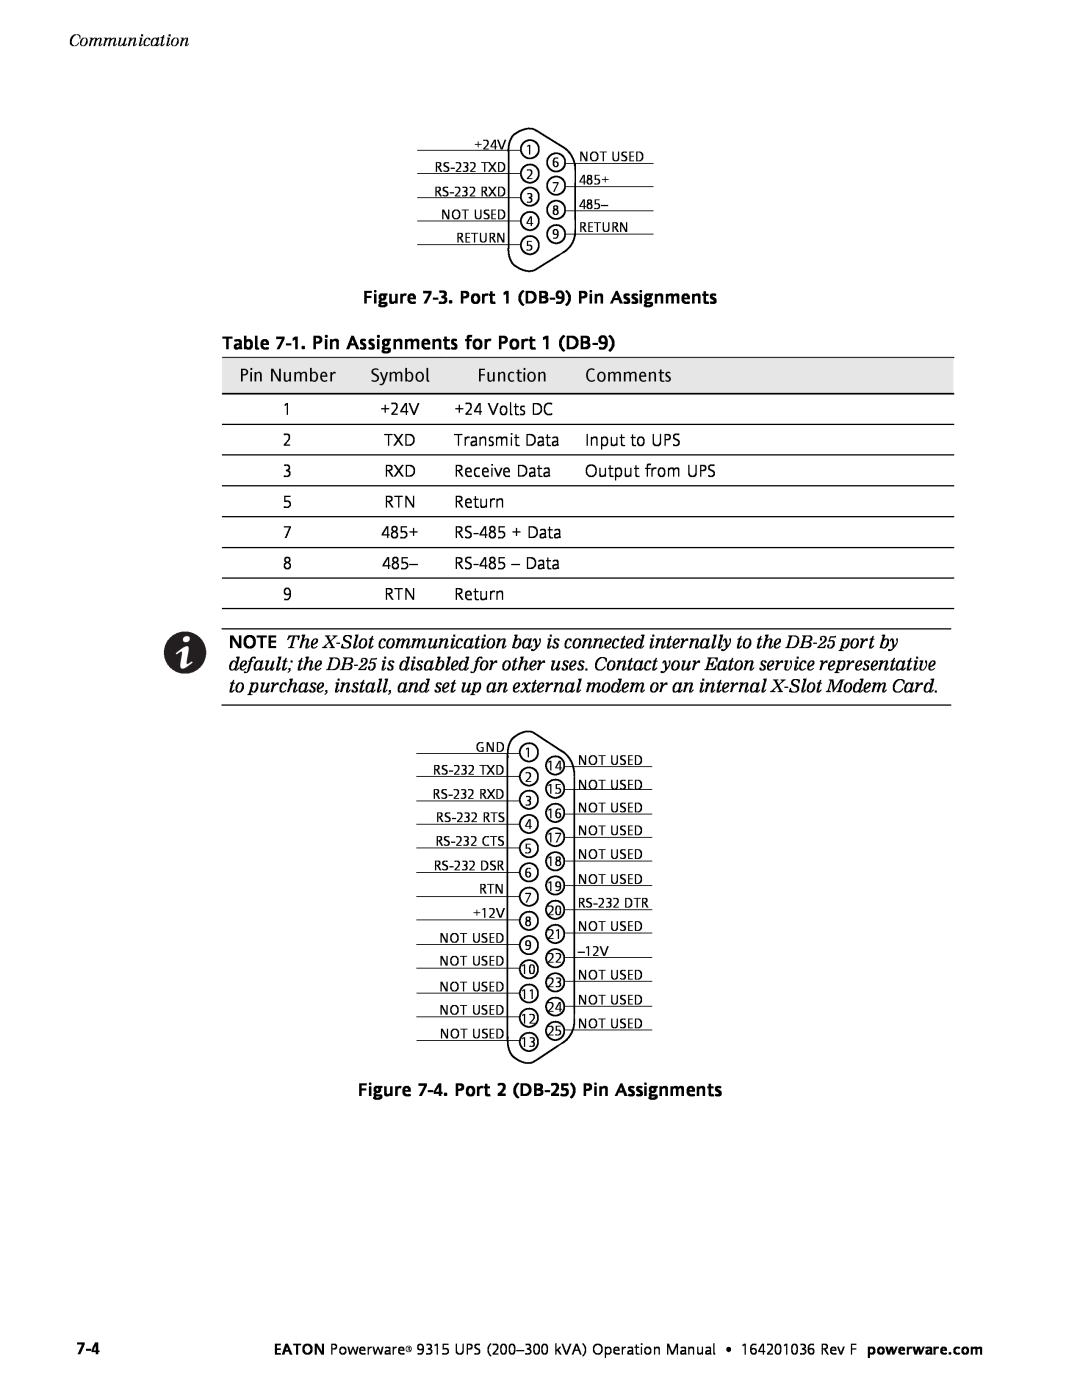 Eaton Electrical Powerware 9315 operation manual 1. Pin Assignments for Port 1 DB-9, 3. Port 1 DB-9 Pin Assignments 